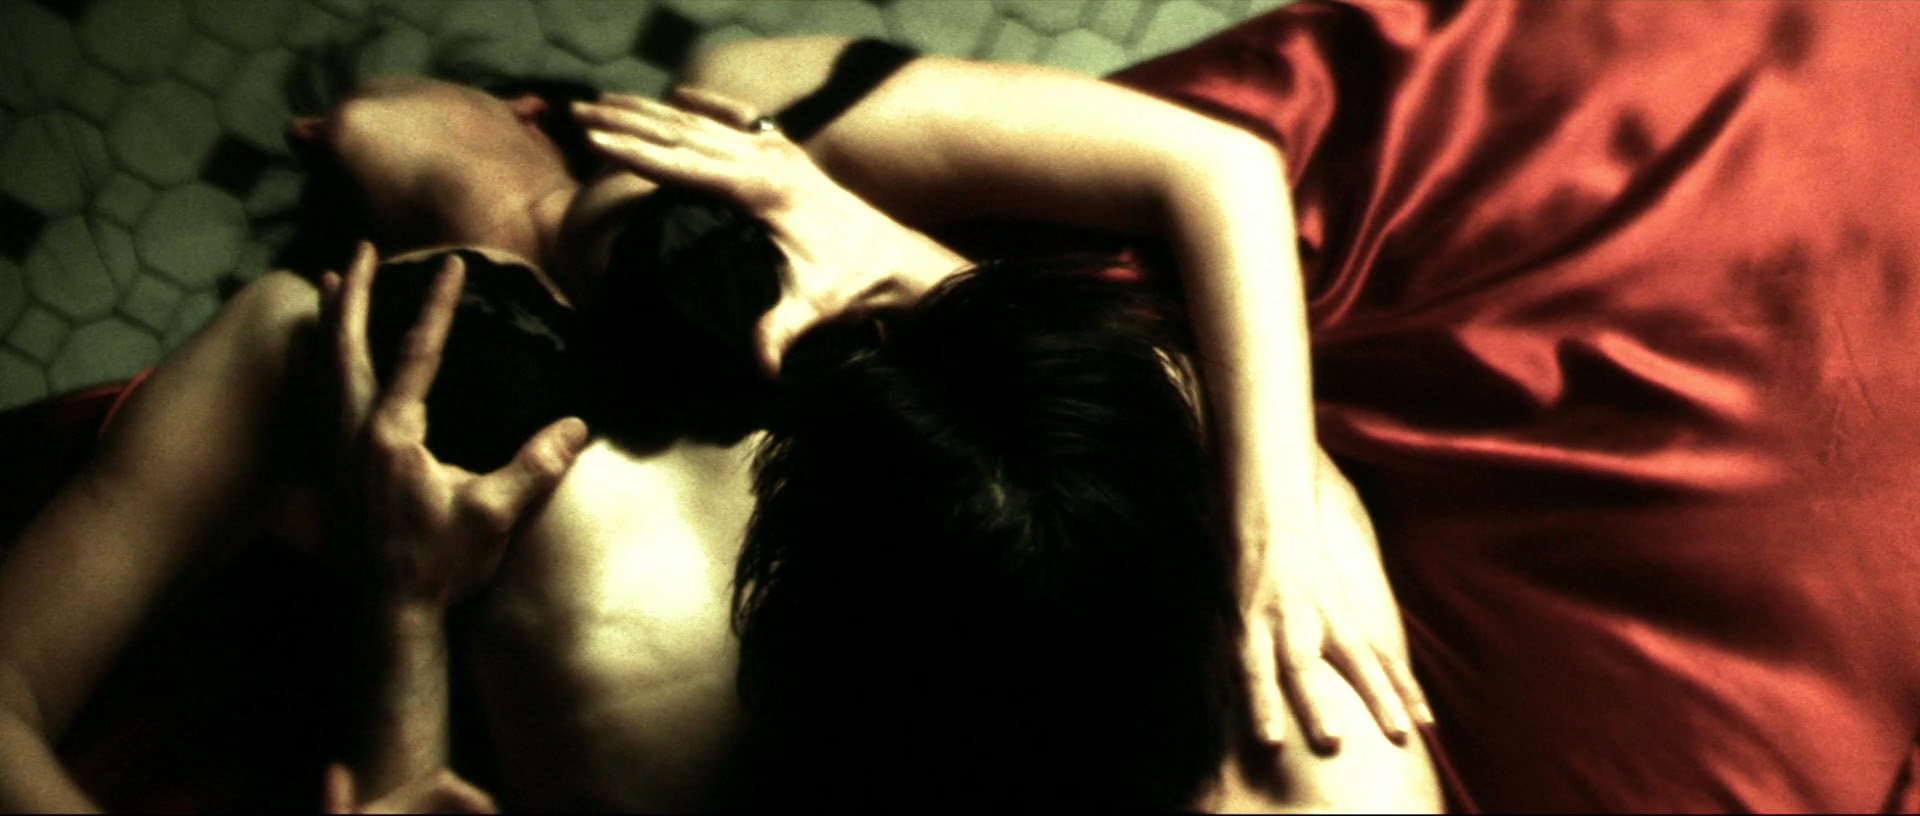 Virginia Madsen, Rhona Mitra - The Number 23 (2007) HD 1080p